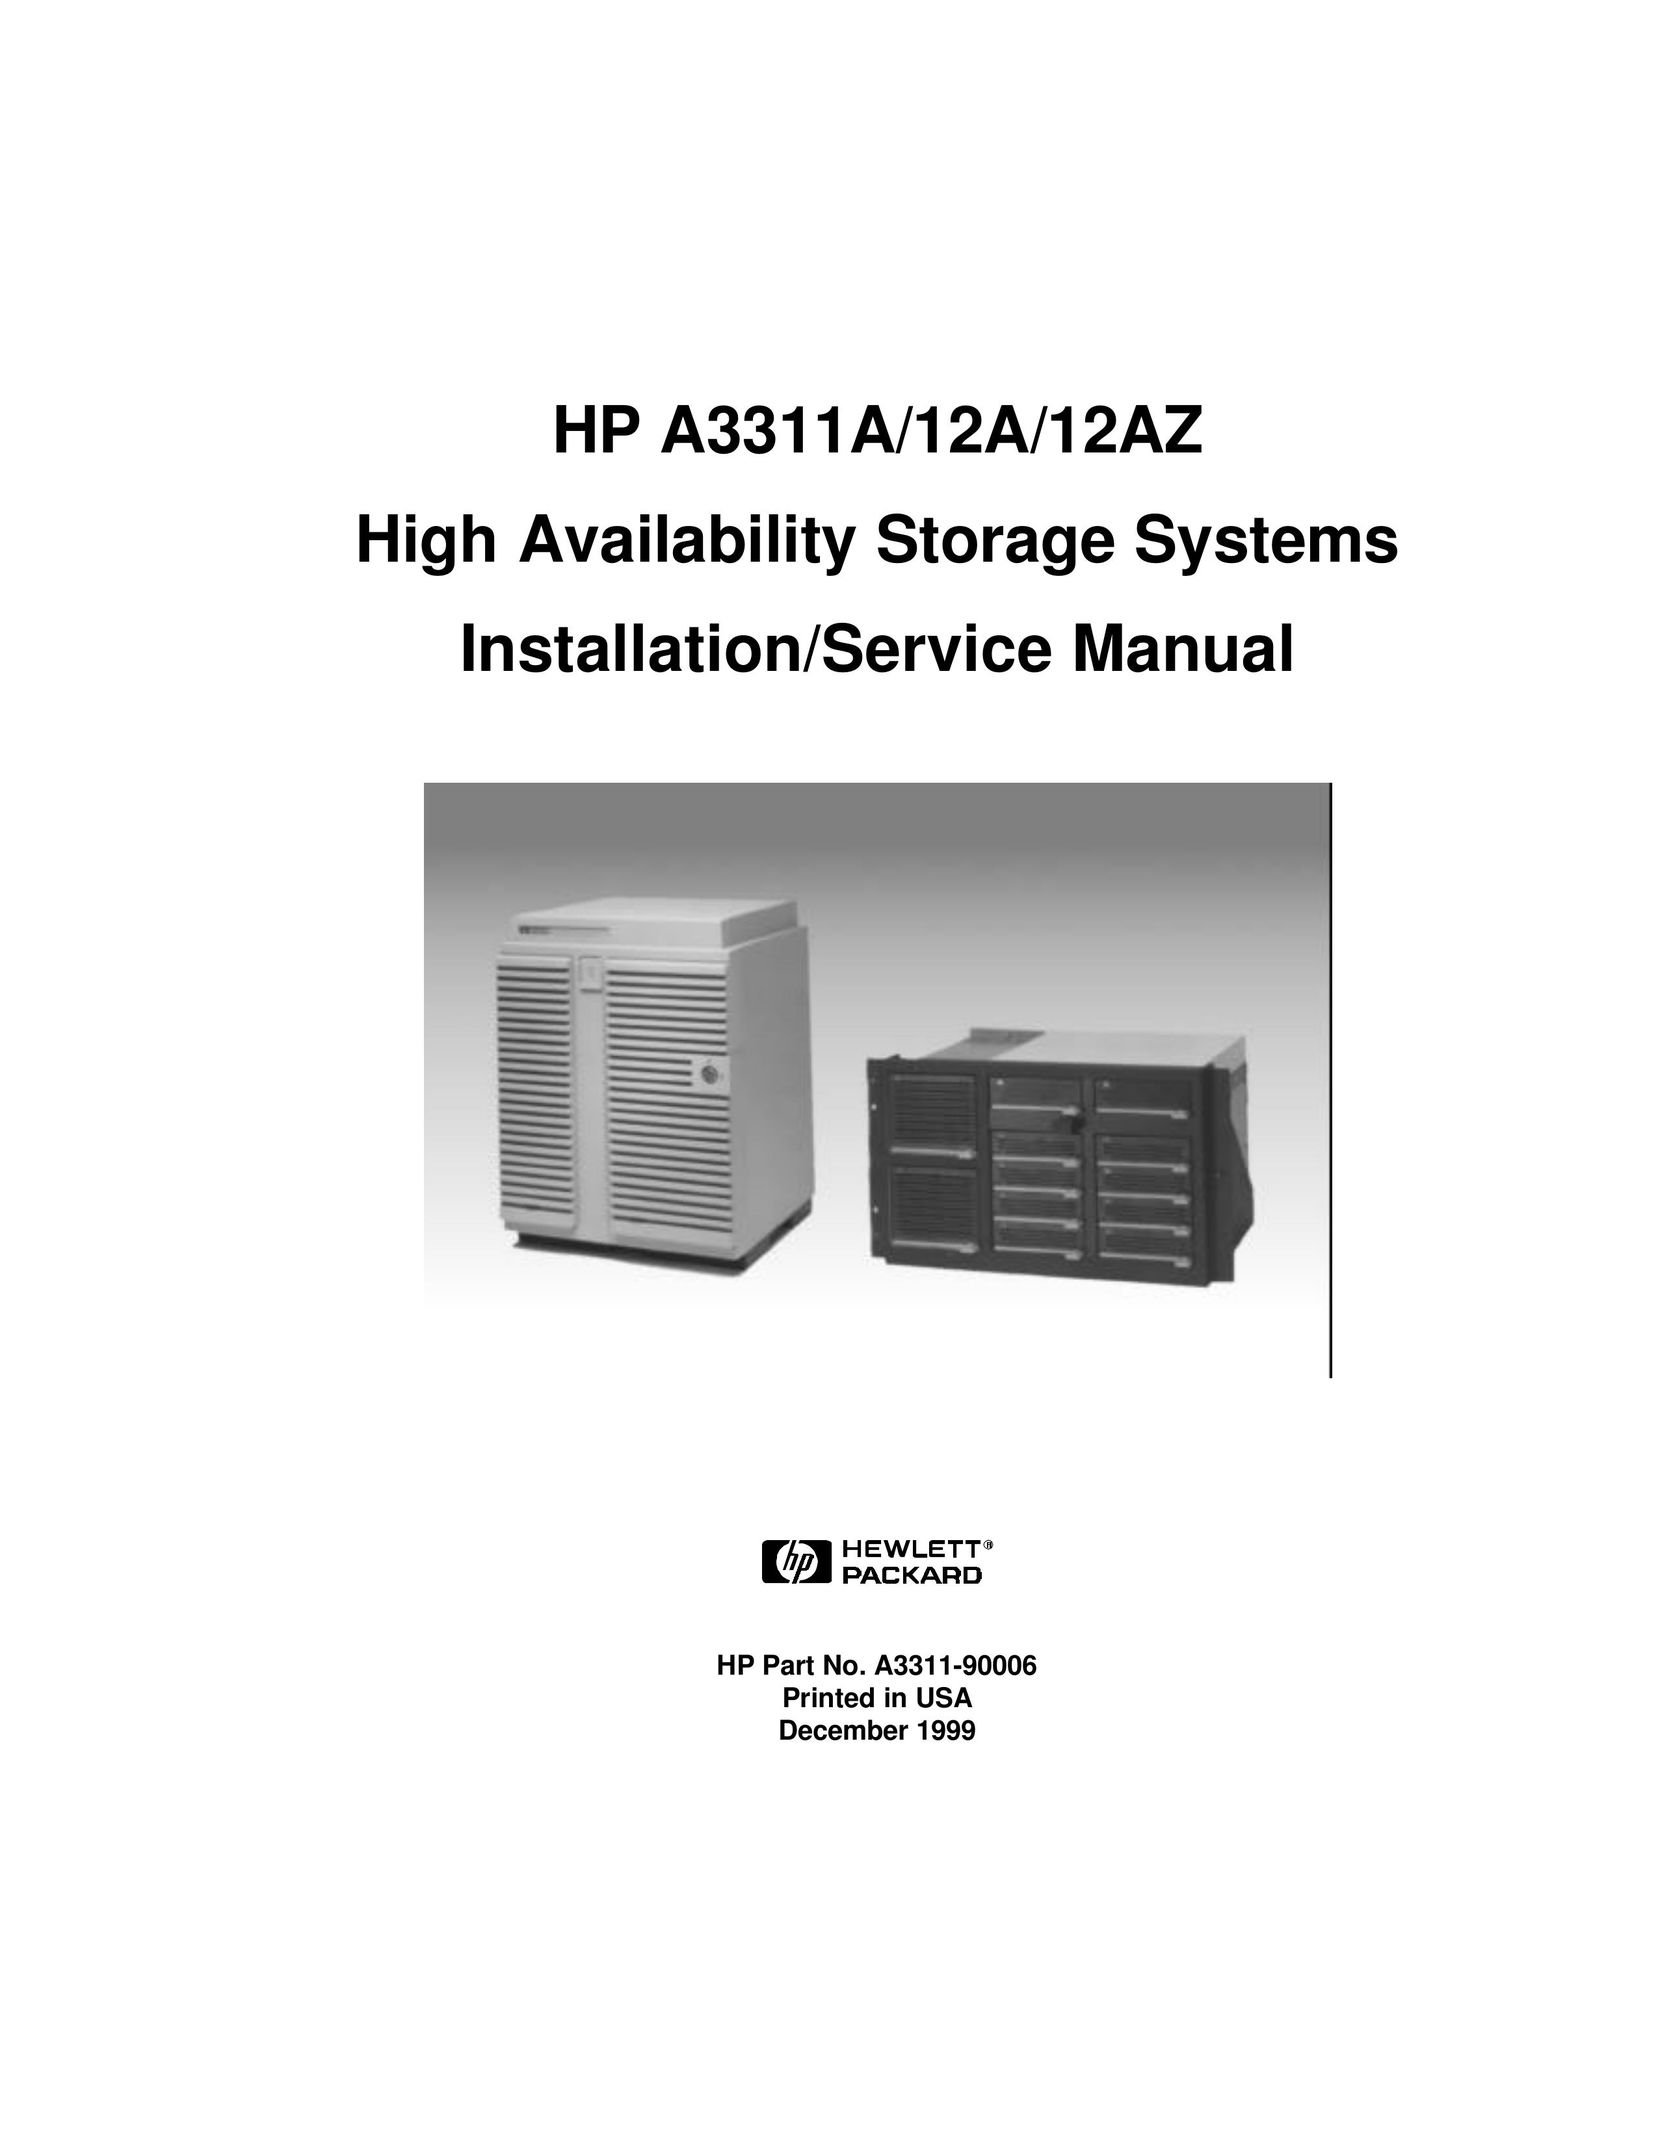 HP (Hewlett-Packard) A3312A Tool Storage User Manual